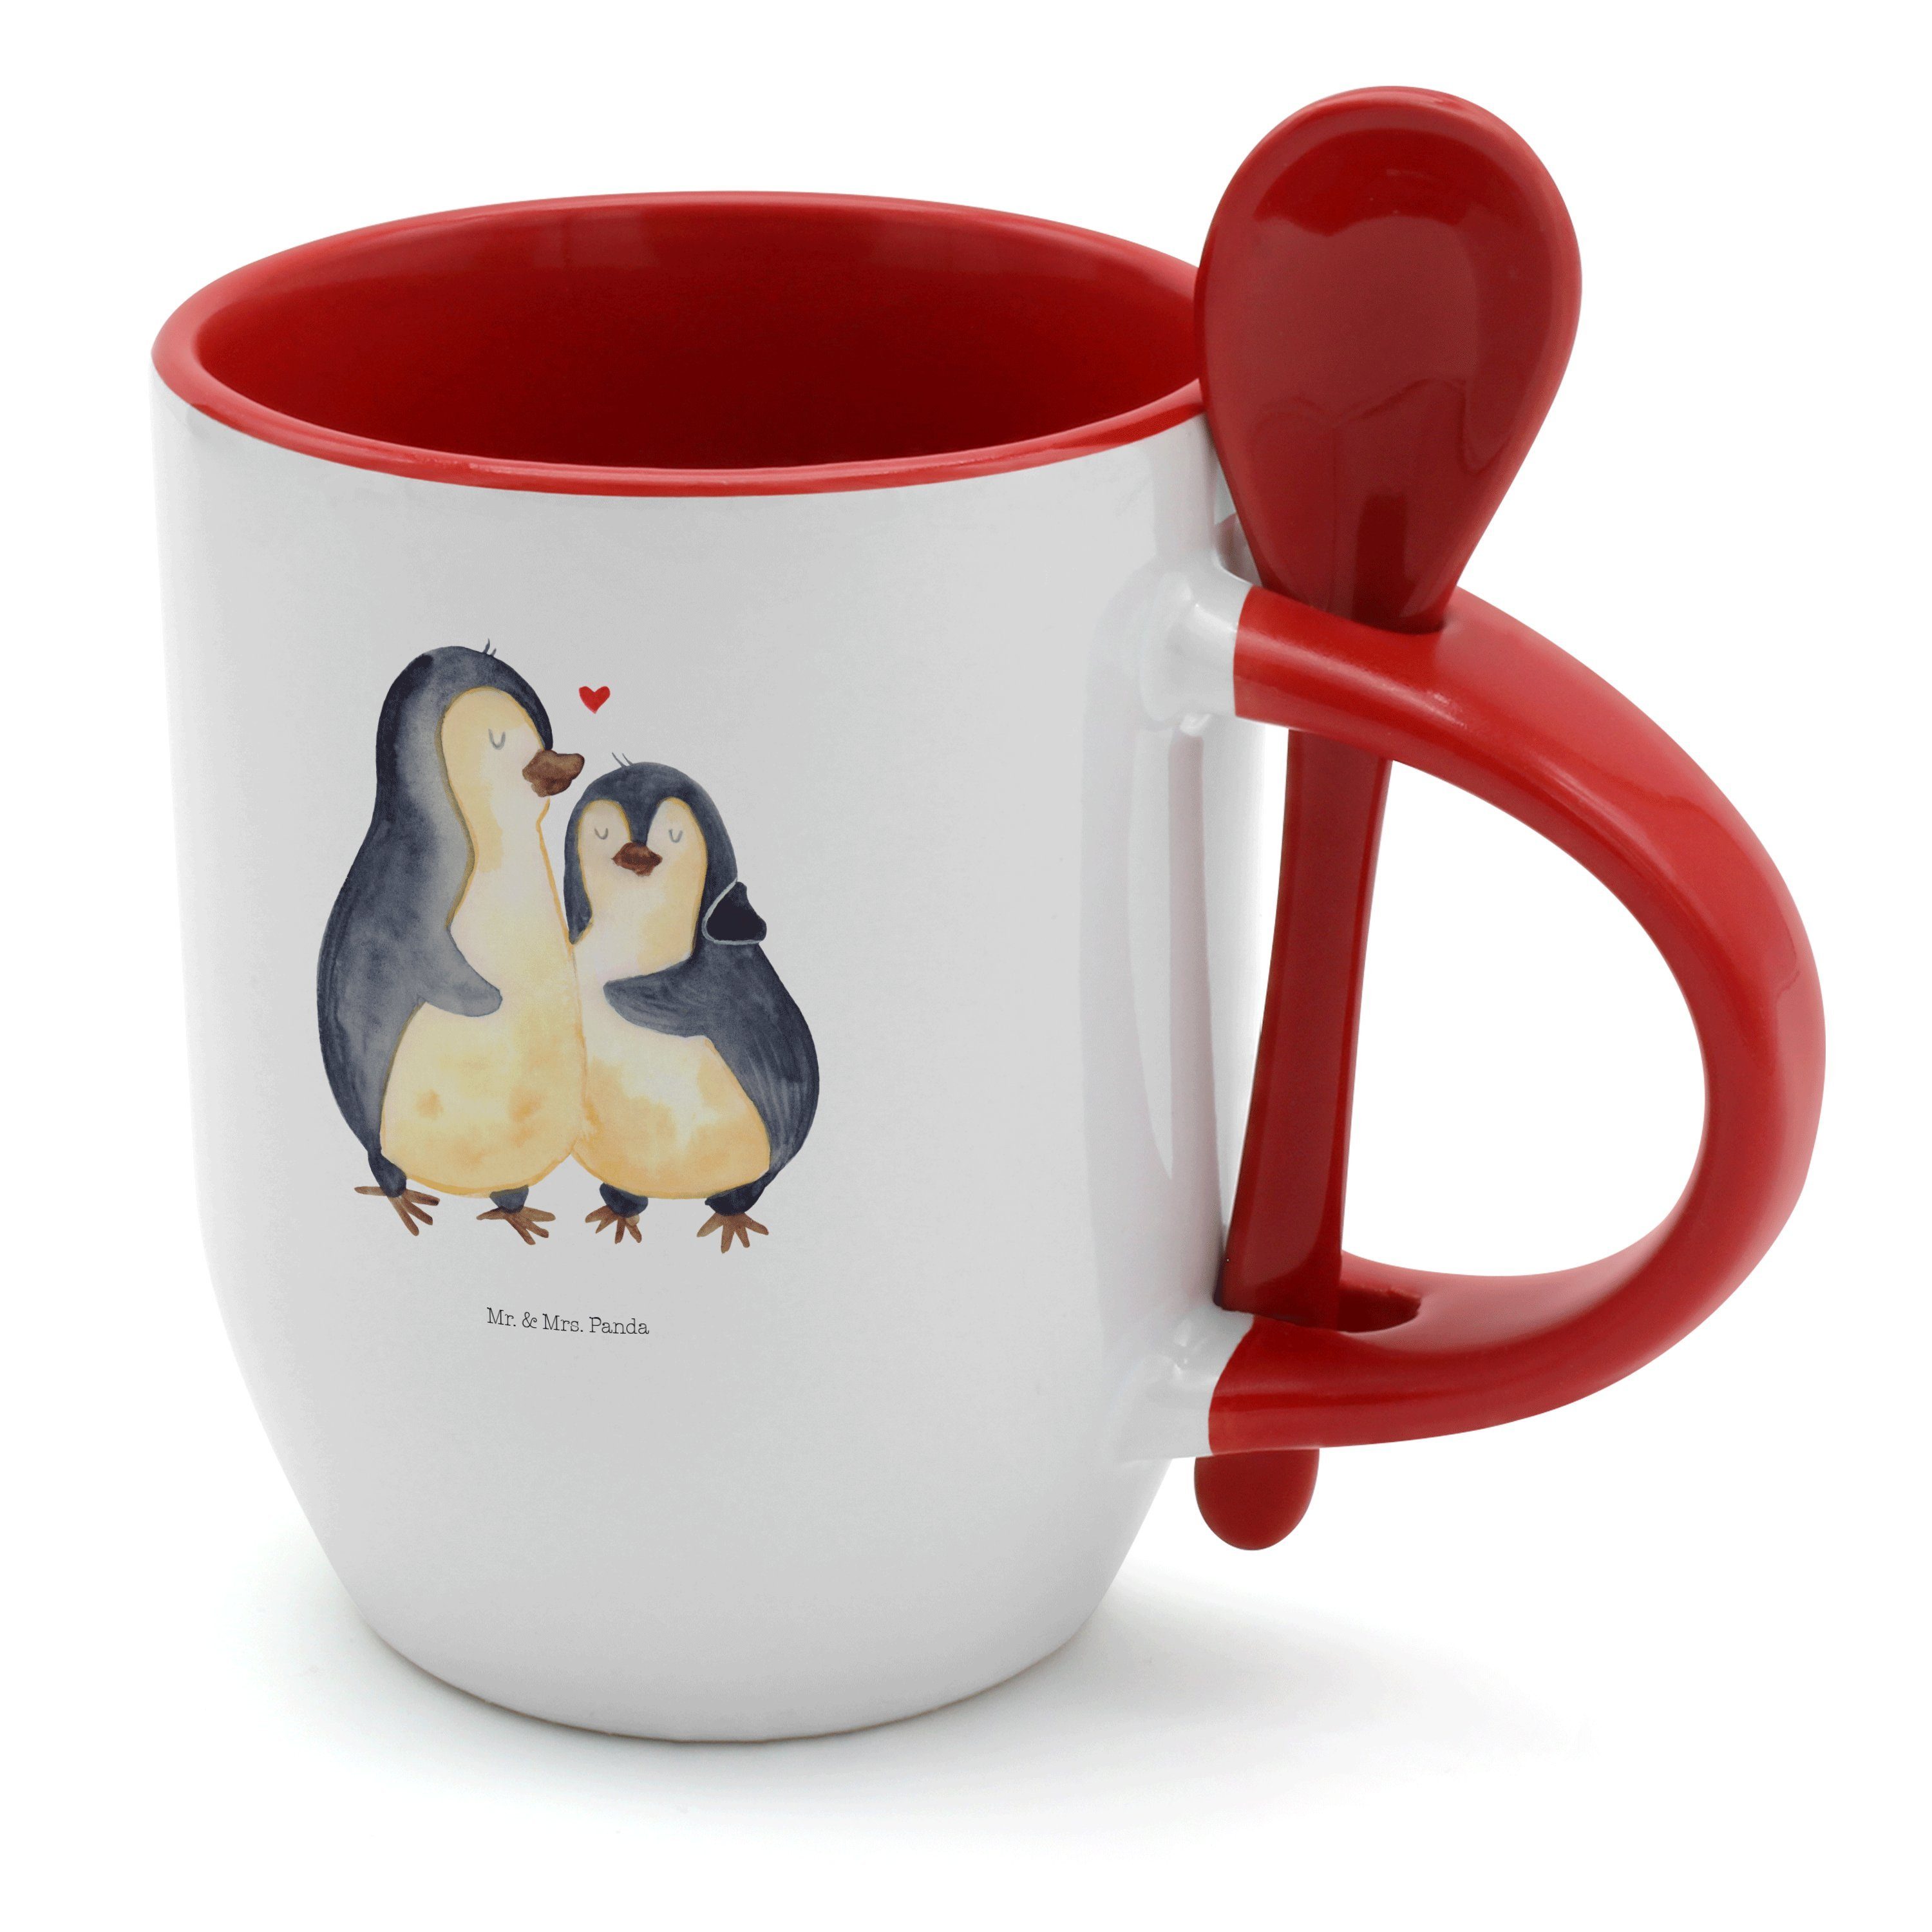 Mr. & Mrs. Panda Tasse Pinguin umarmend - Weiß - Geschenk, Liebesgeschenk, Tassen, Paar, Lie, Keramik